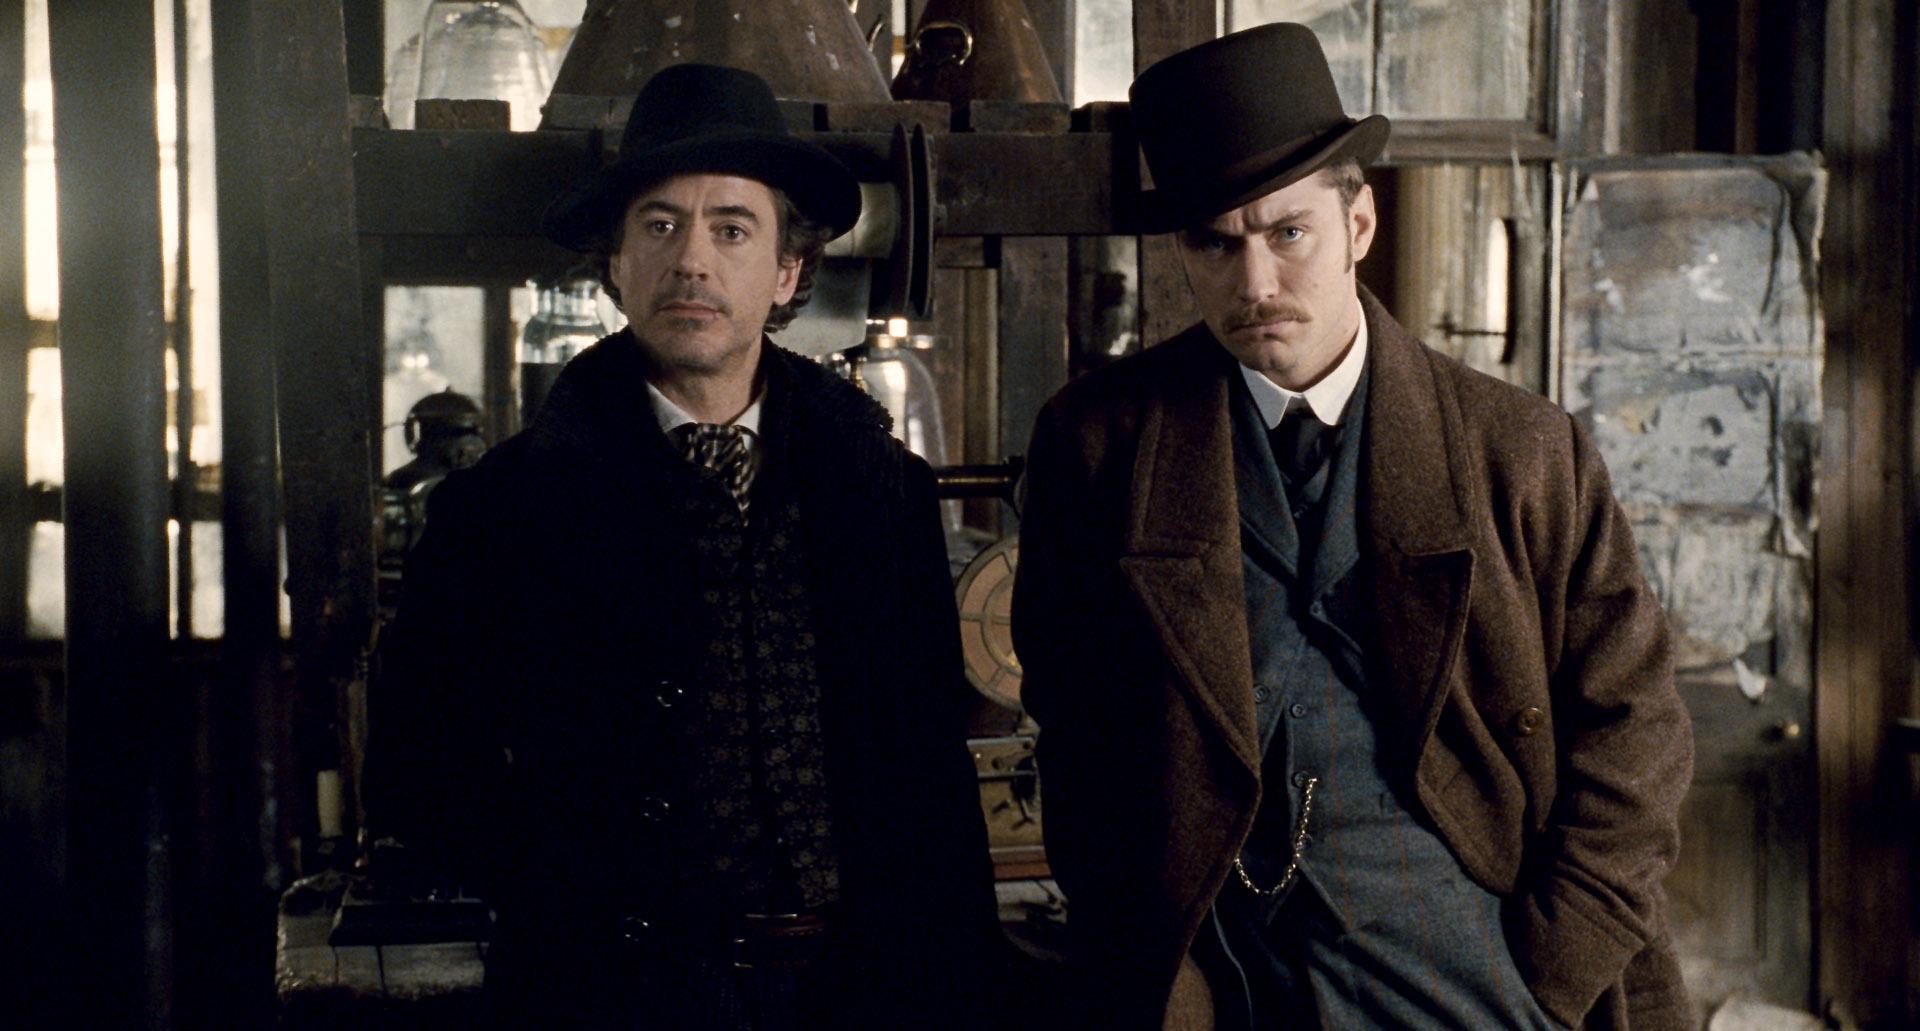 Sherlock Holmes and Watson inside a store. 